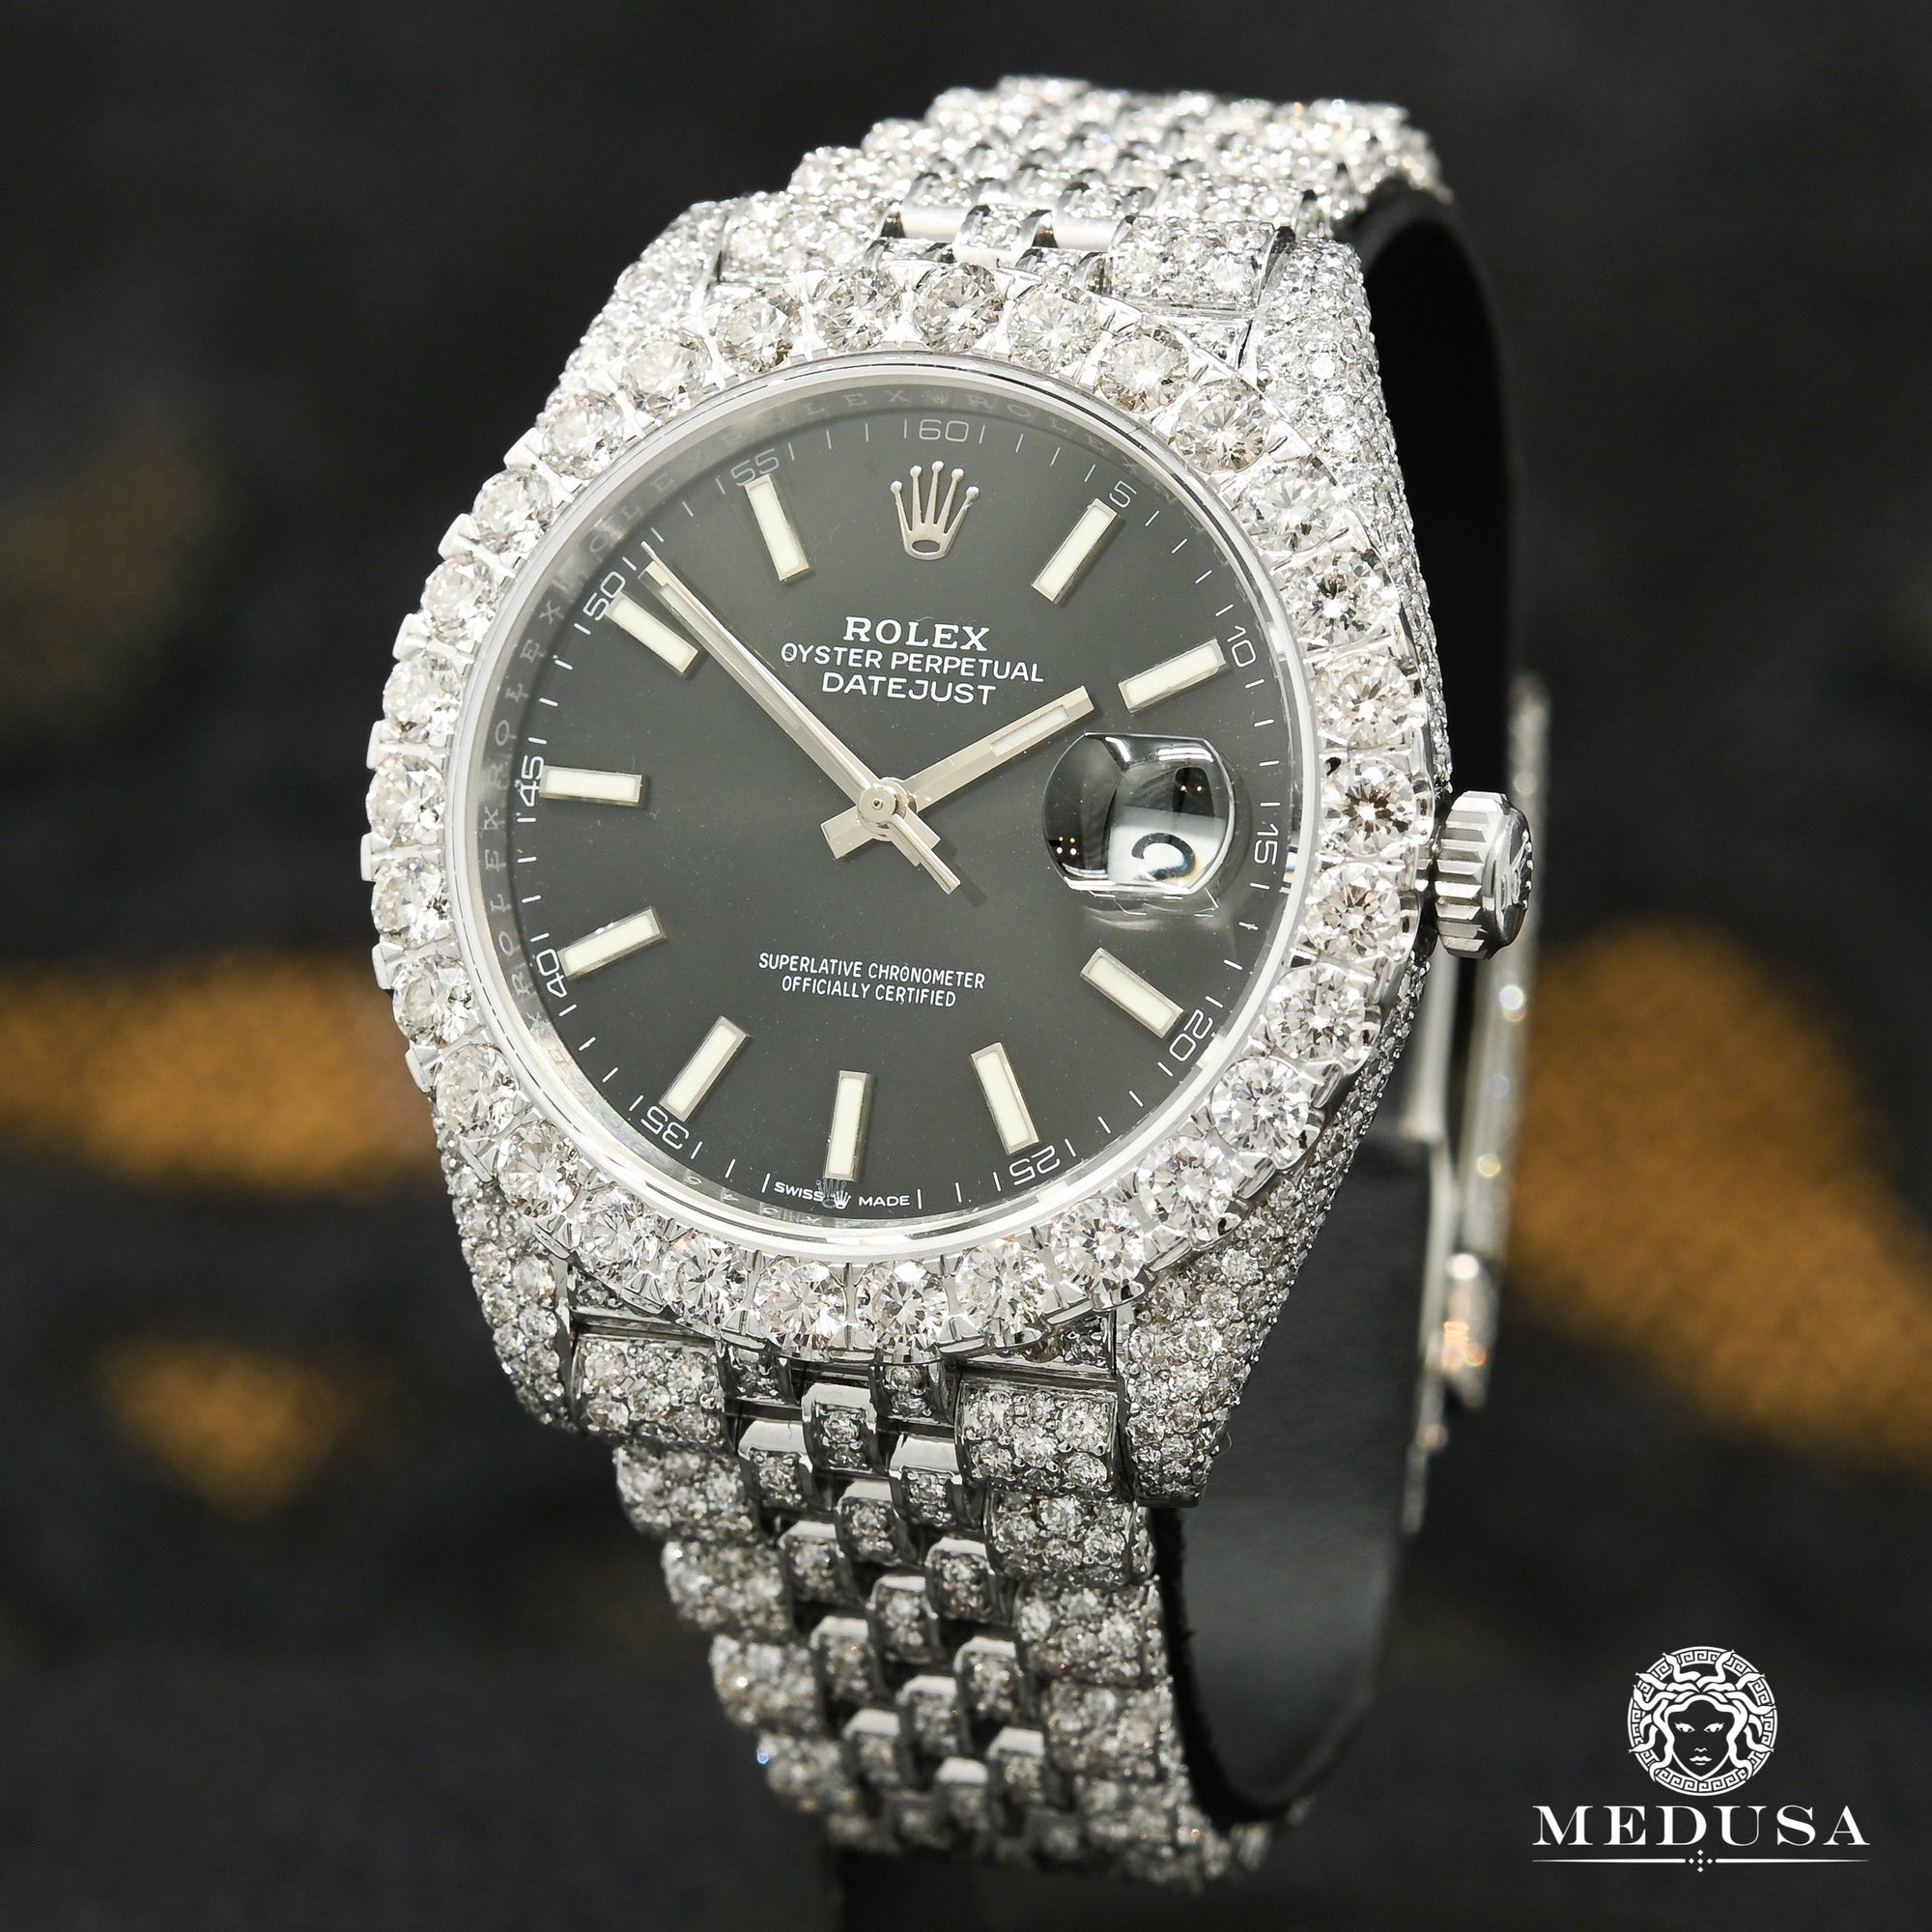 Rolex watch | Rolex Datejust Men's Watch 41mm - Jubilee Full Black Stainless